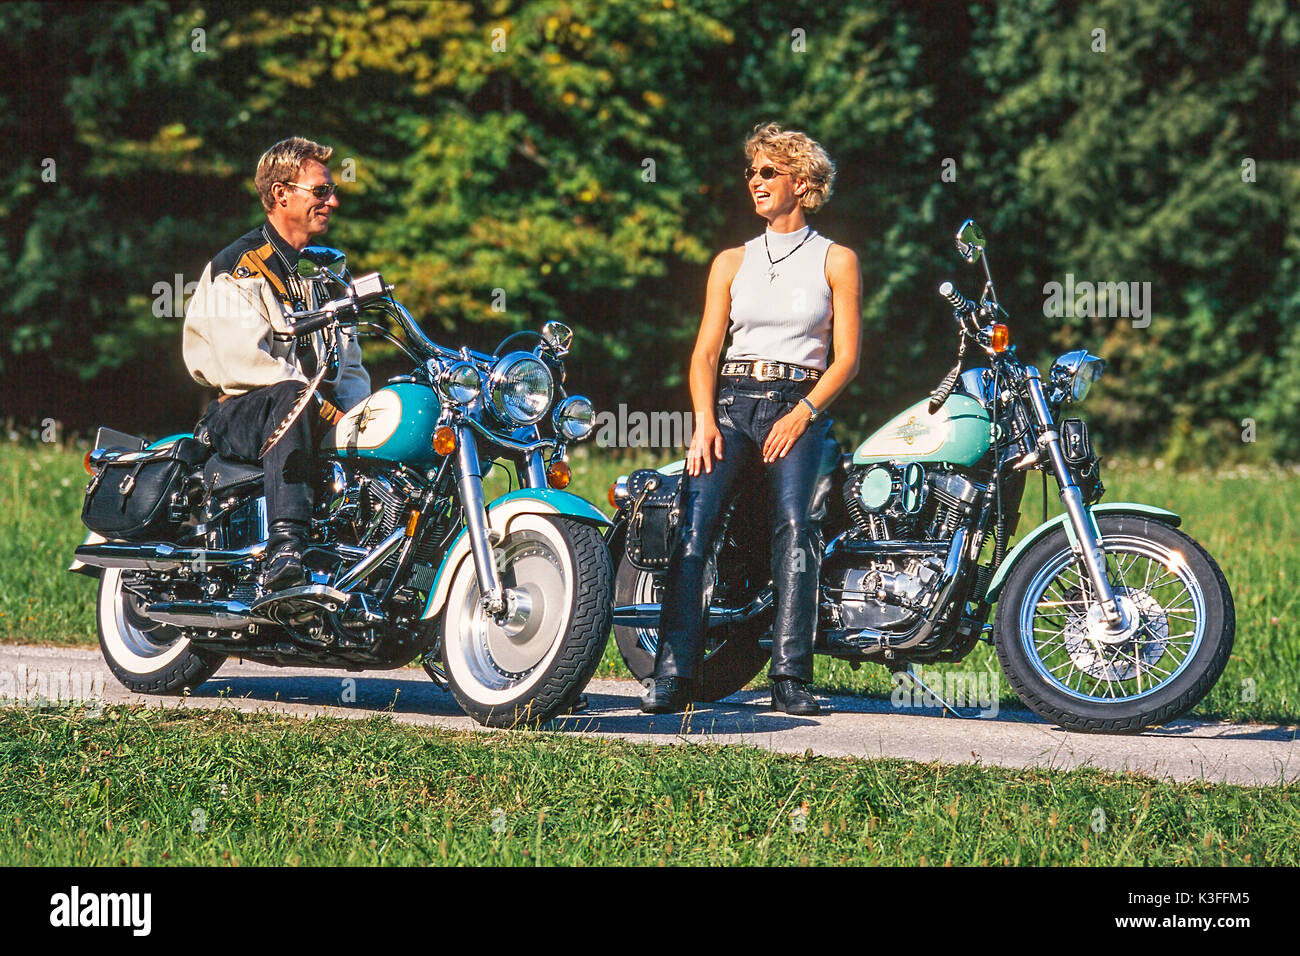 Par de motos Harley Davidson Foto de stock